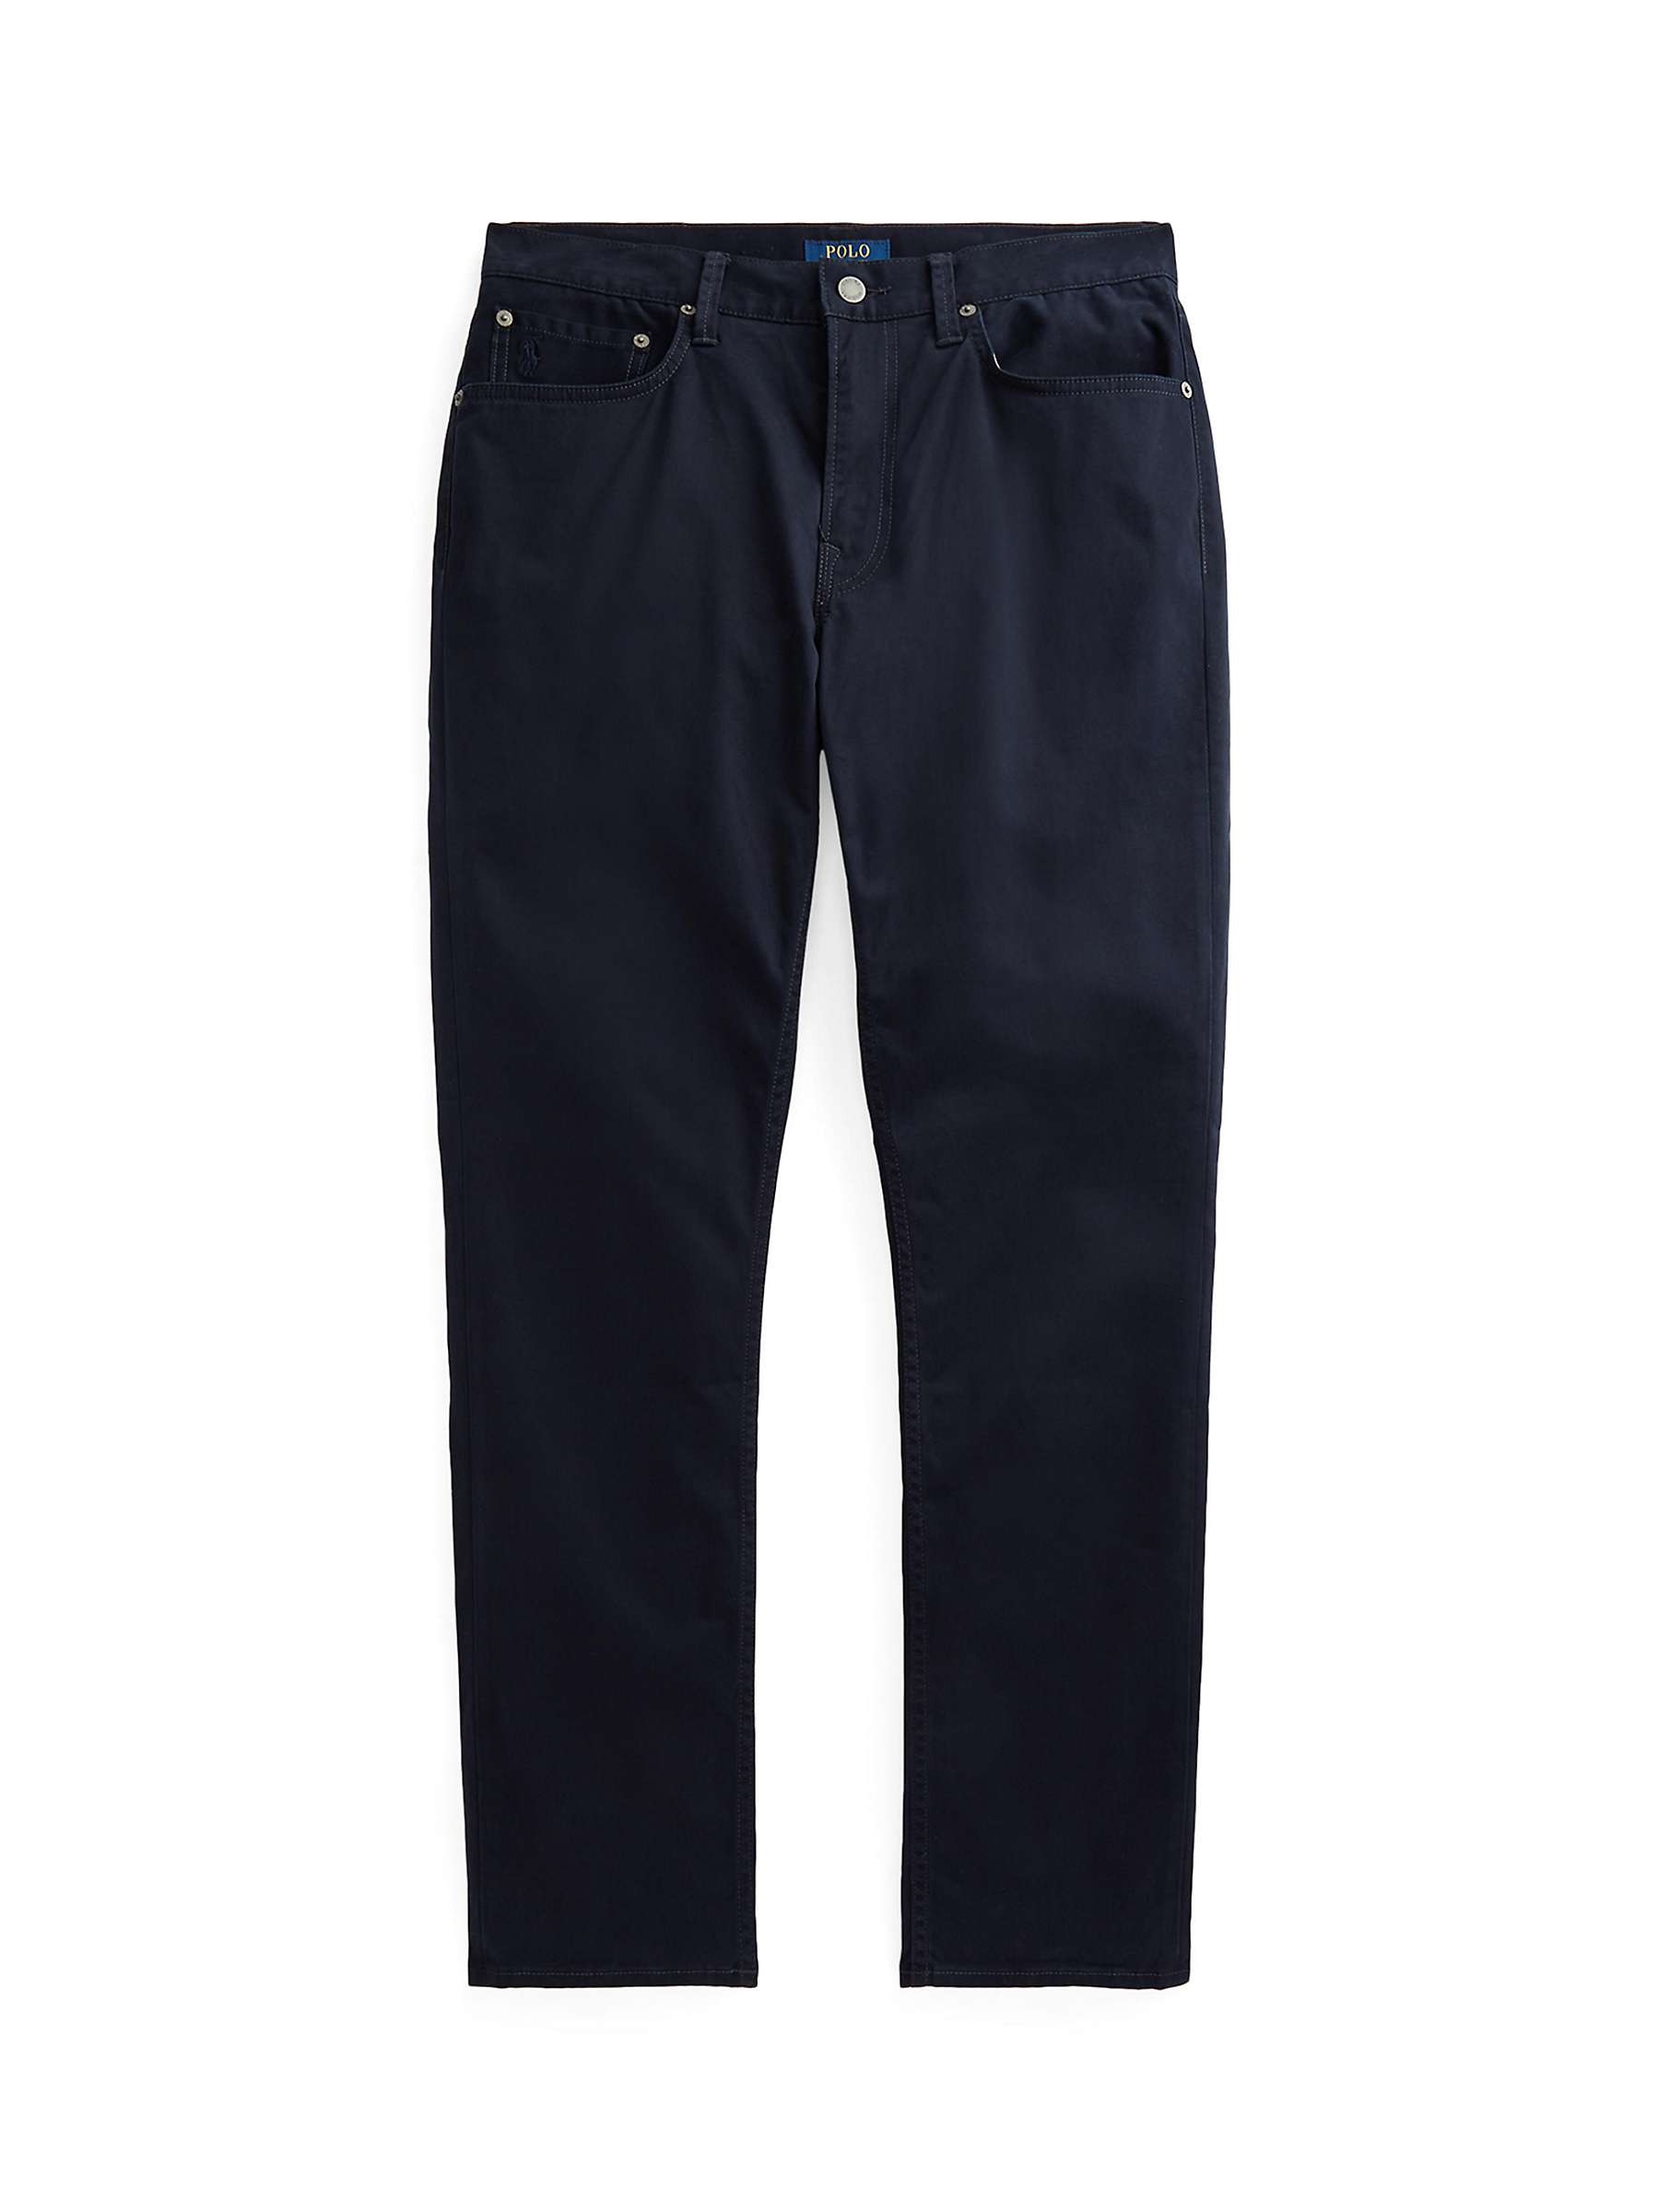 Buy Polo Ralph Lauren Sullivan 5 Pocket Trousers, Navy Online at johnlewis.com